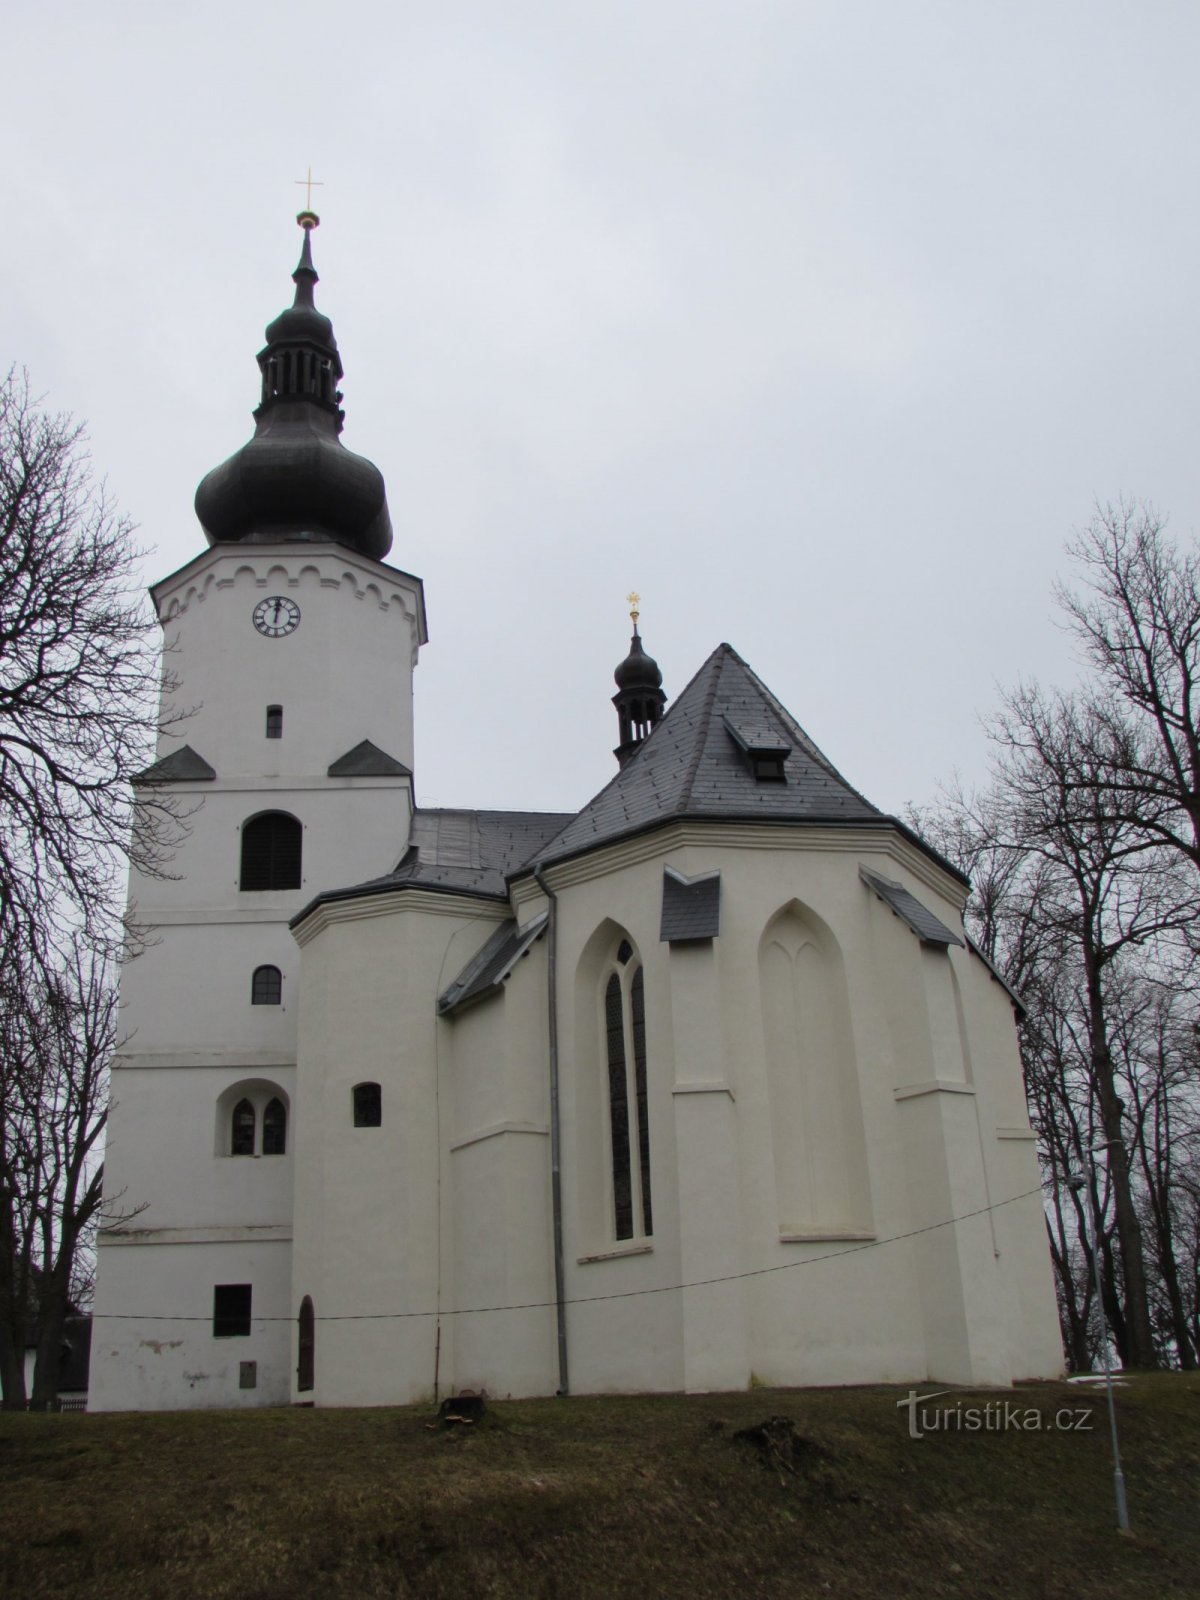 Jindřichovice, church of St. Martin